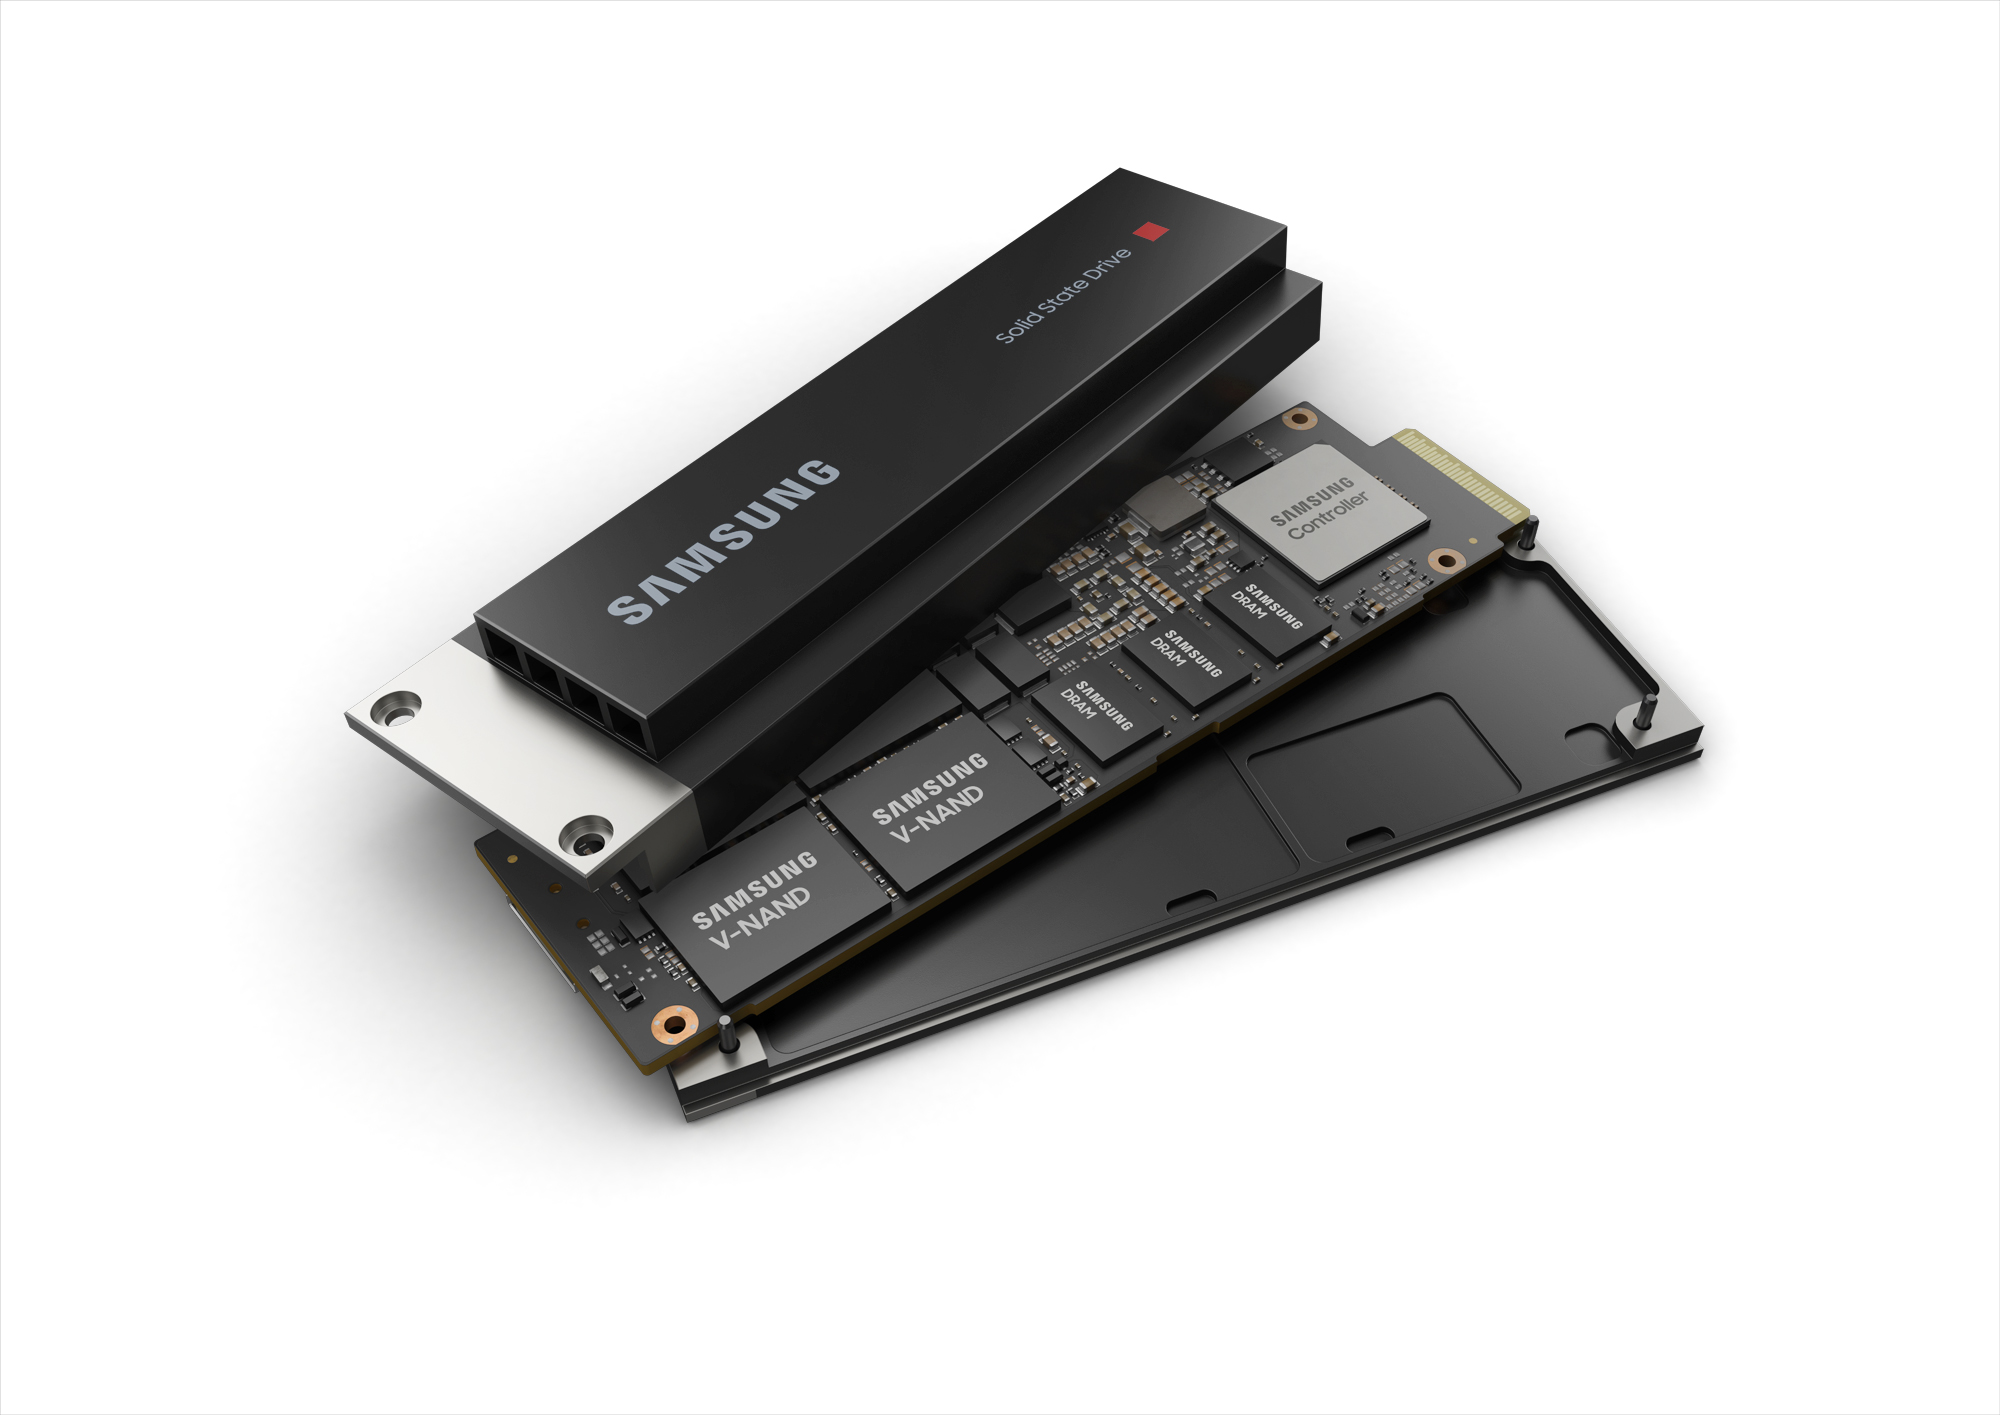 Samsung starts mass producing its most advanced data center SSDs